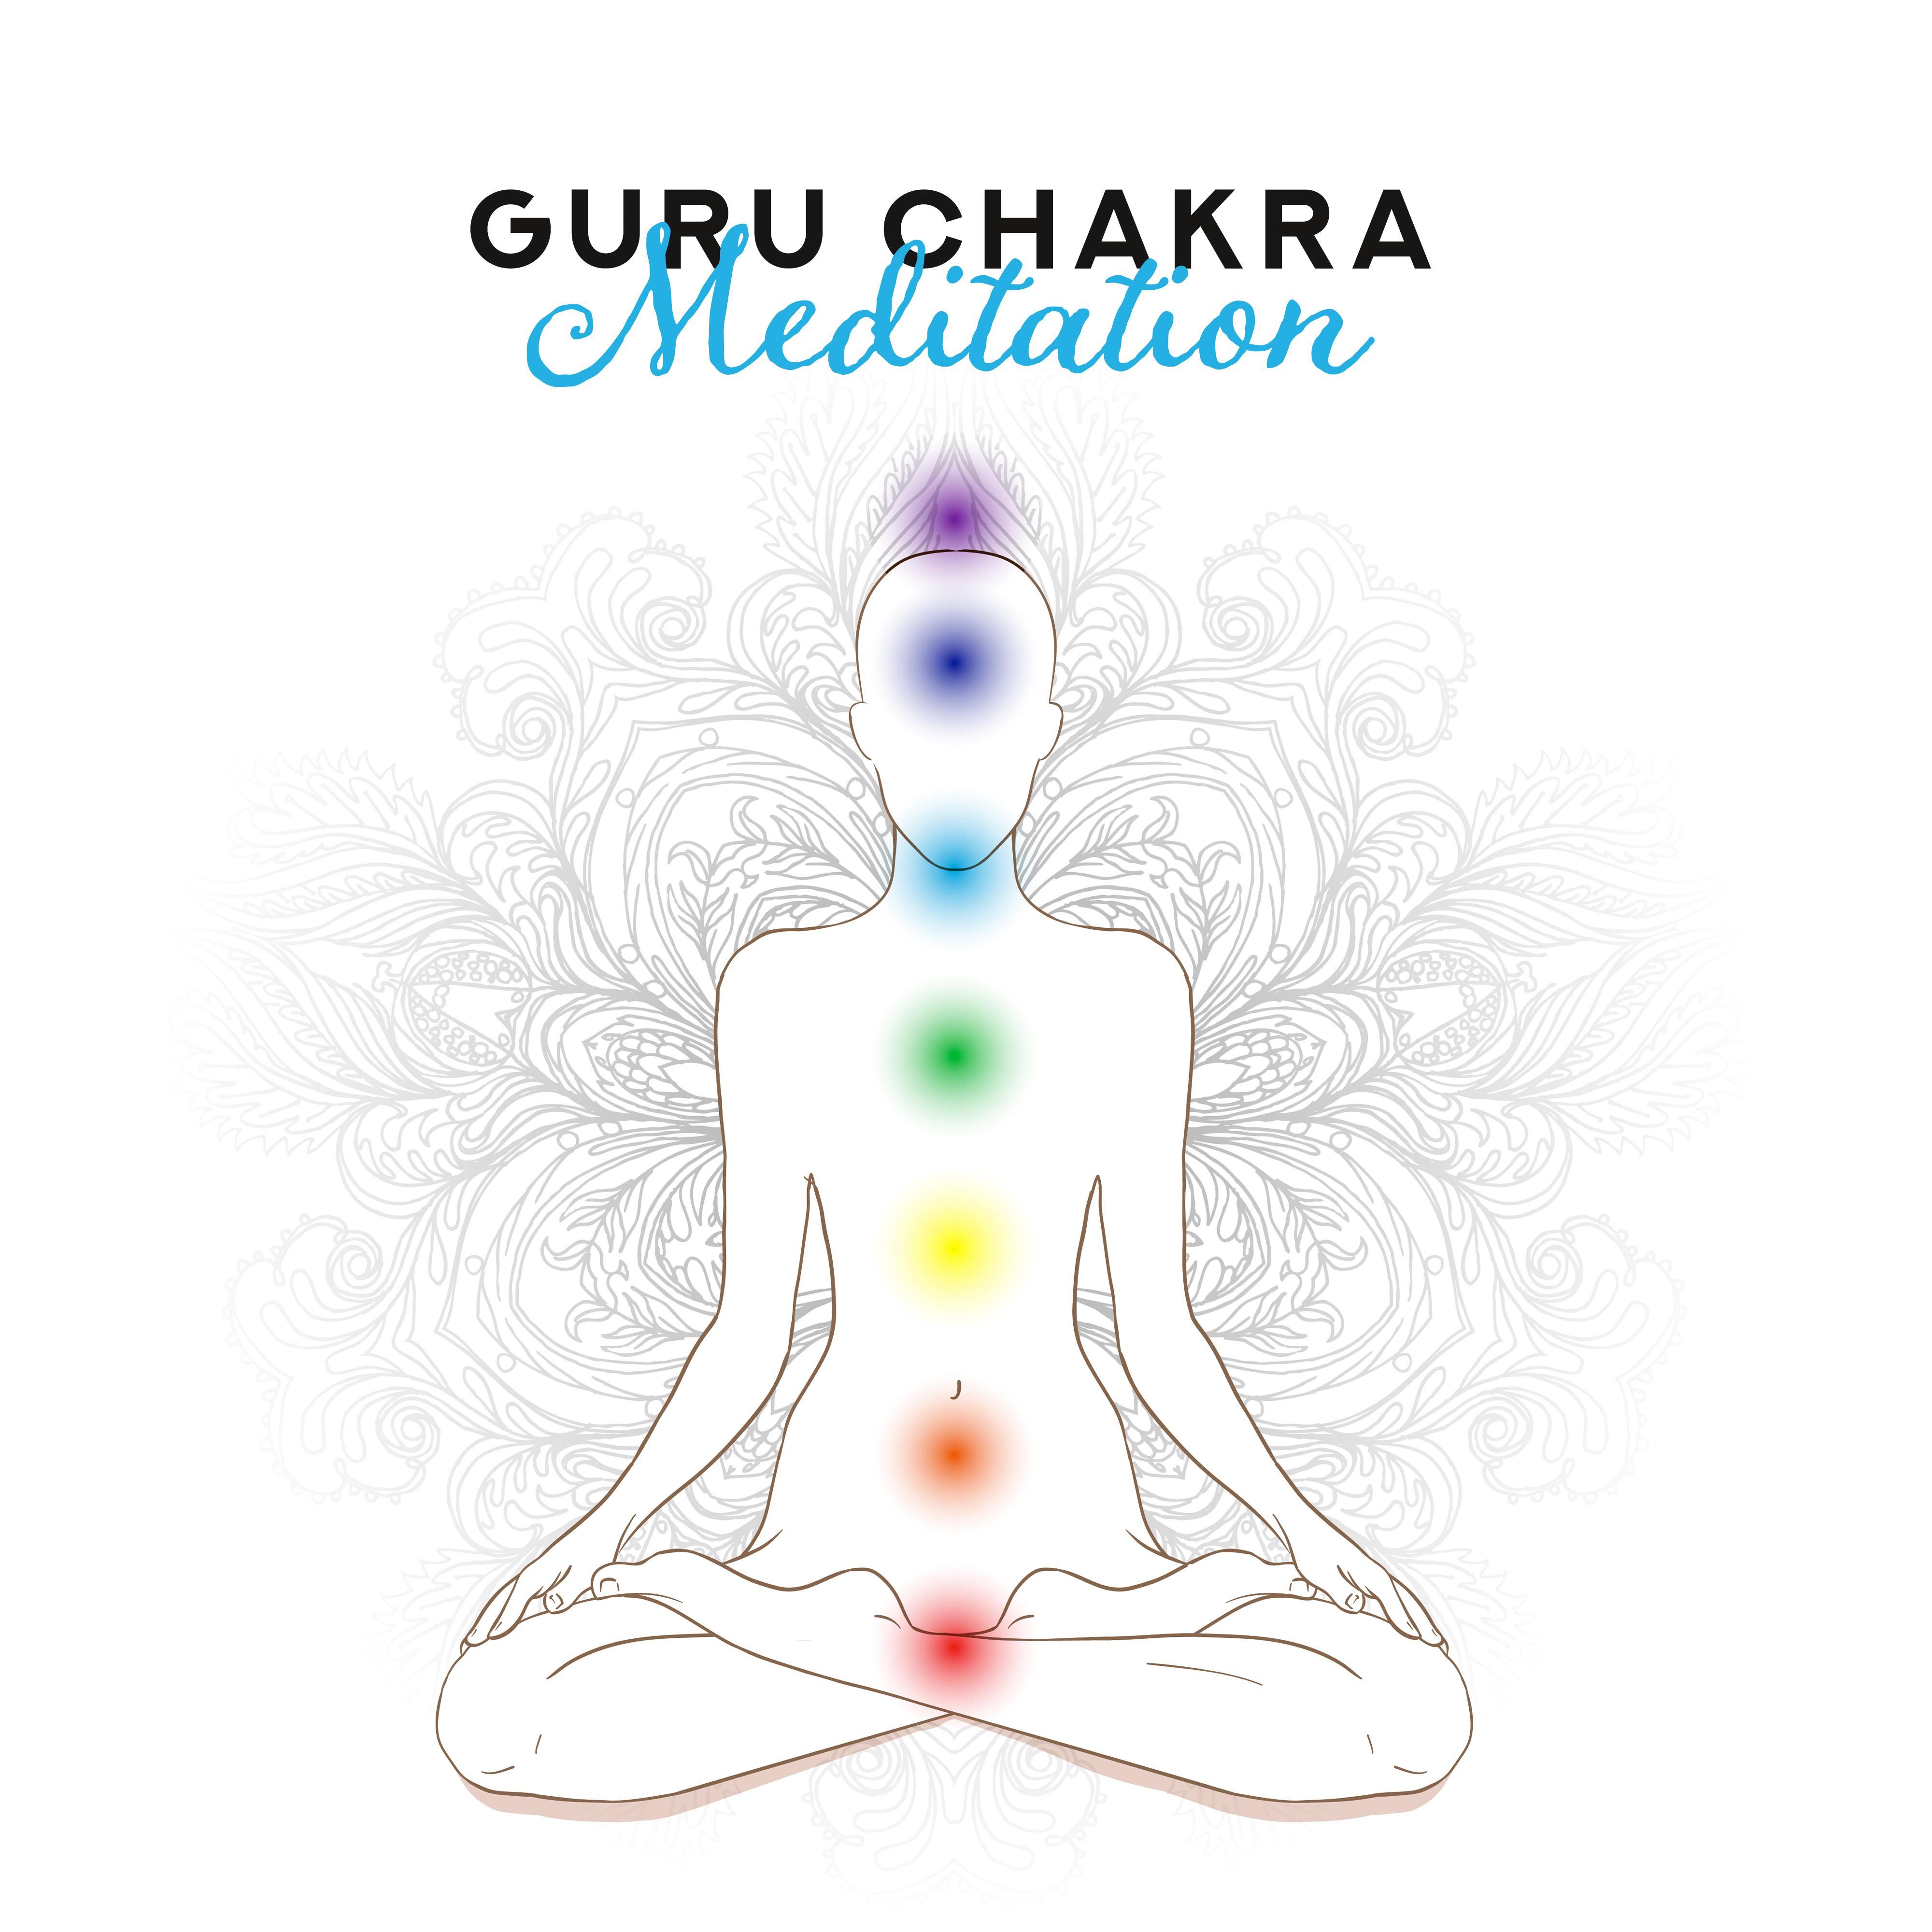 Guru Chakra Meditation: Music Backgrounds for Meditation Opening the Chakra Ajna (Third Eye)